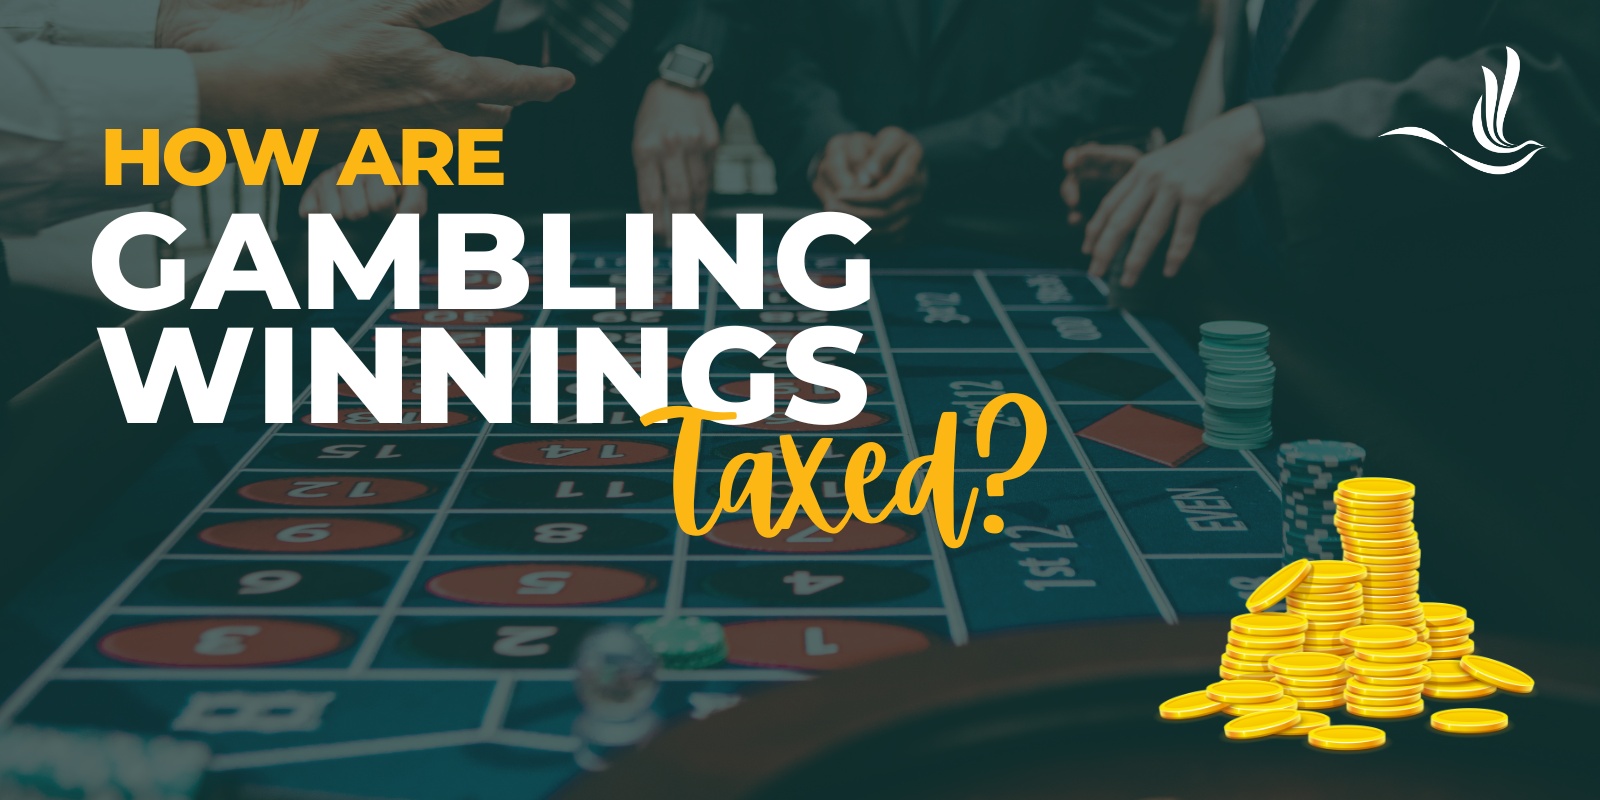 how are gambling winnings taxed?